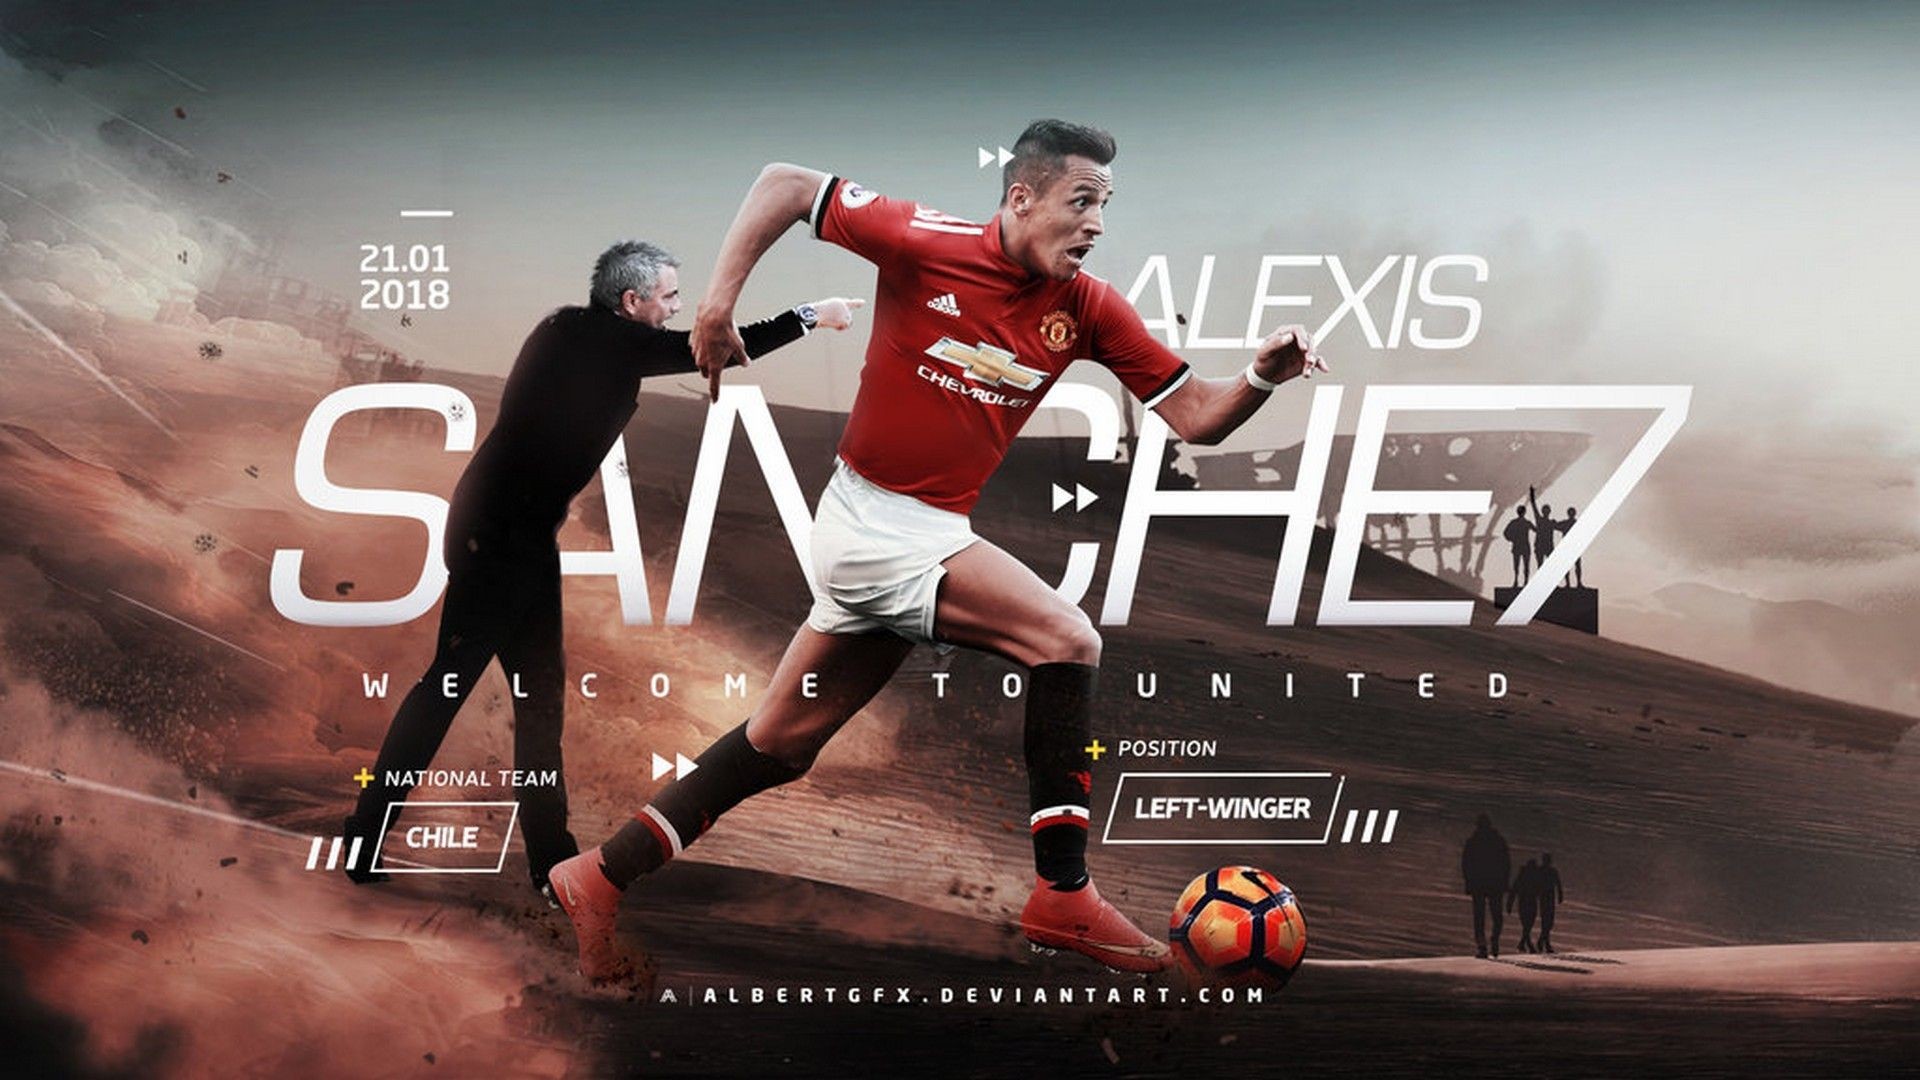 Alexis Sanchez 7 Manchester United Wallpaper Hd Best Wallpaper Hd 1920x1080